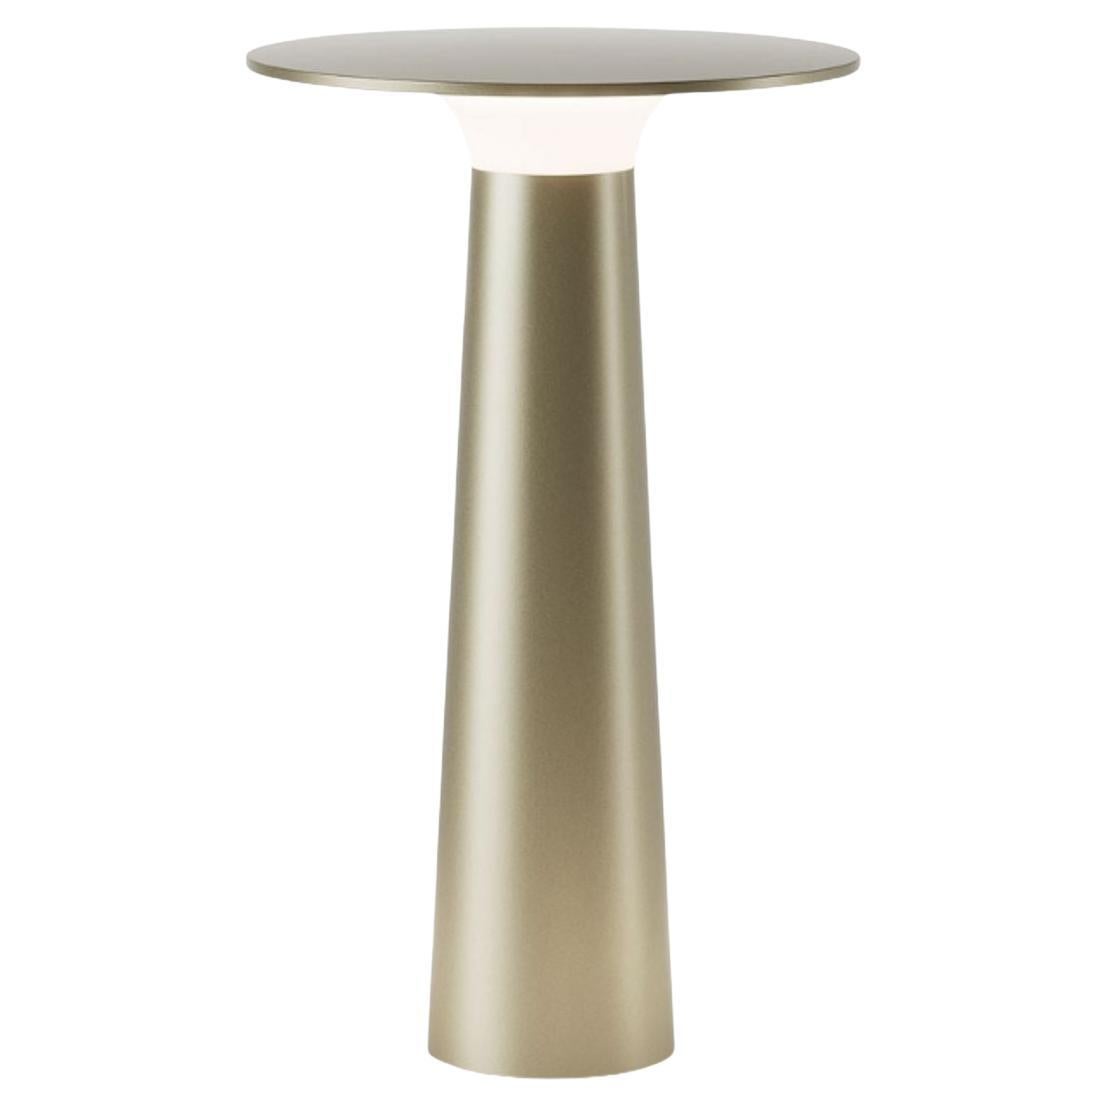 Plastic Klaus Nolting 'Lix' Portable Outdoor Aluminum Table Lamp in Bronze for Ip44de For Sale